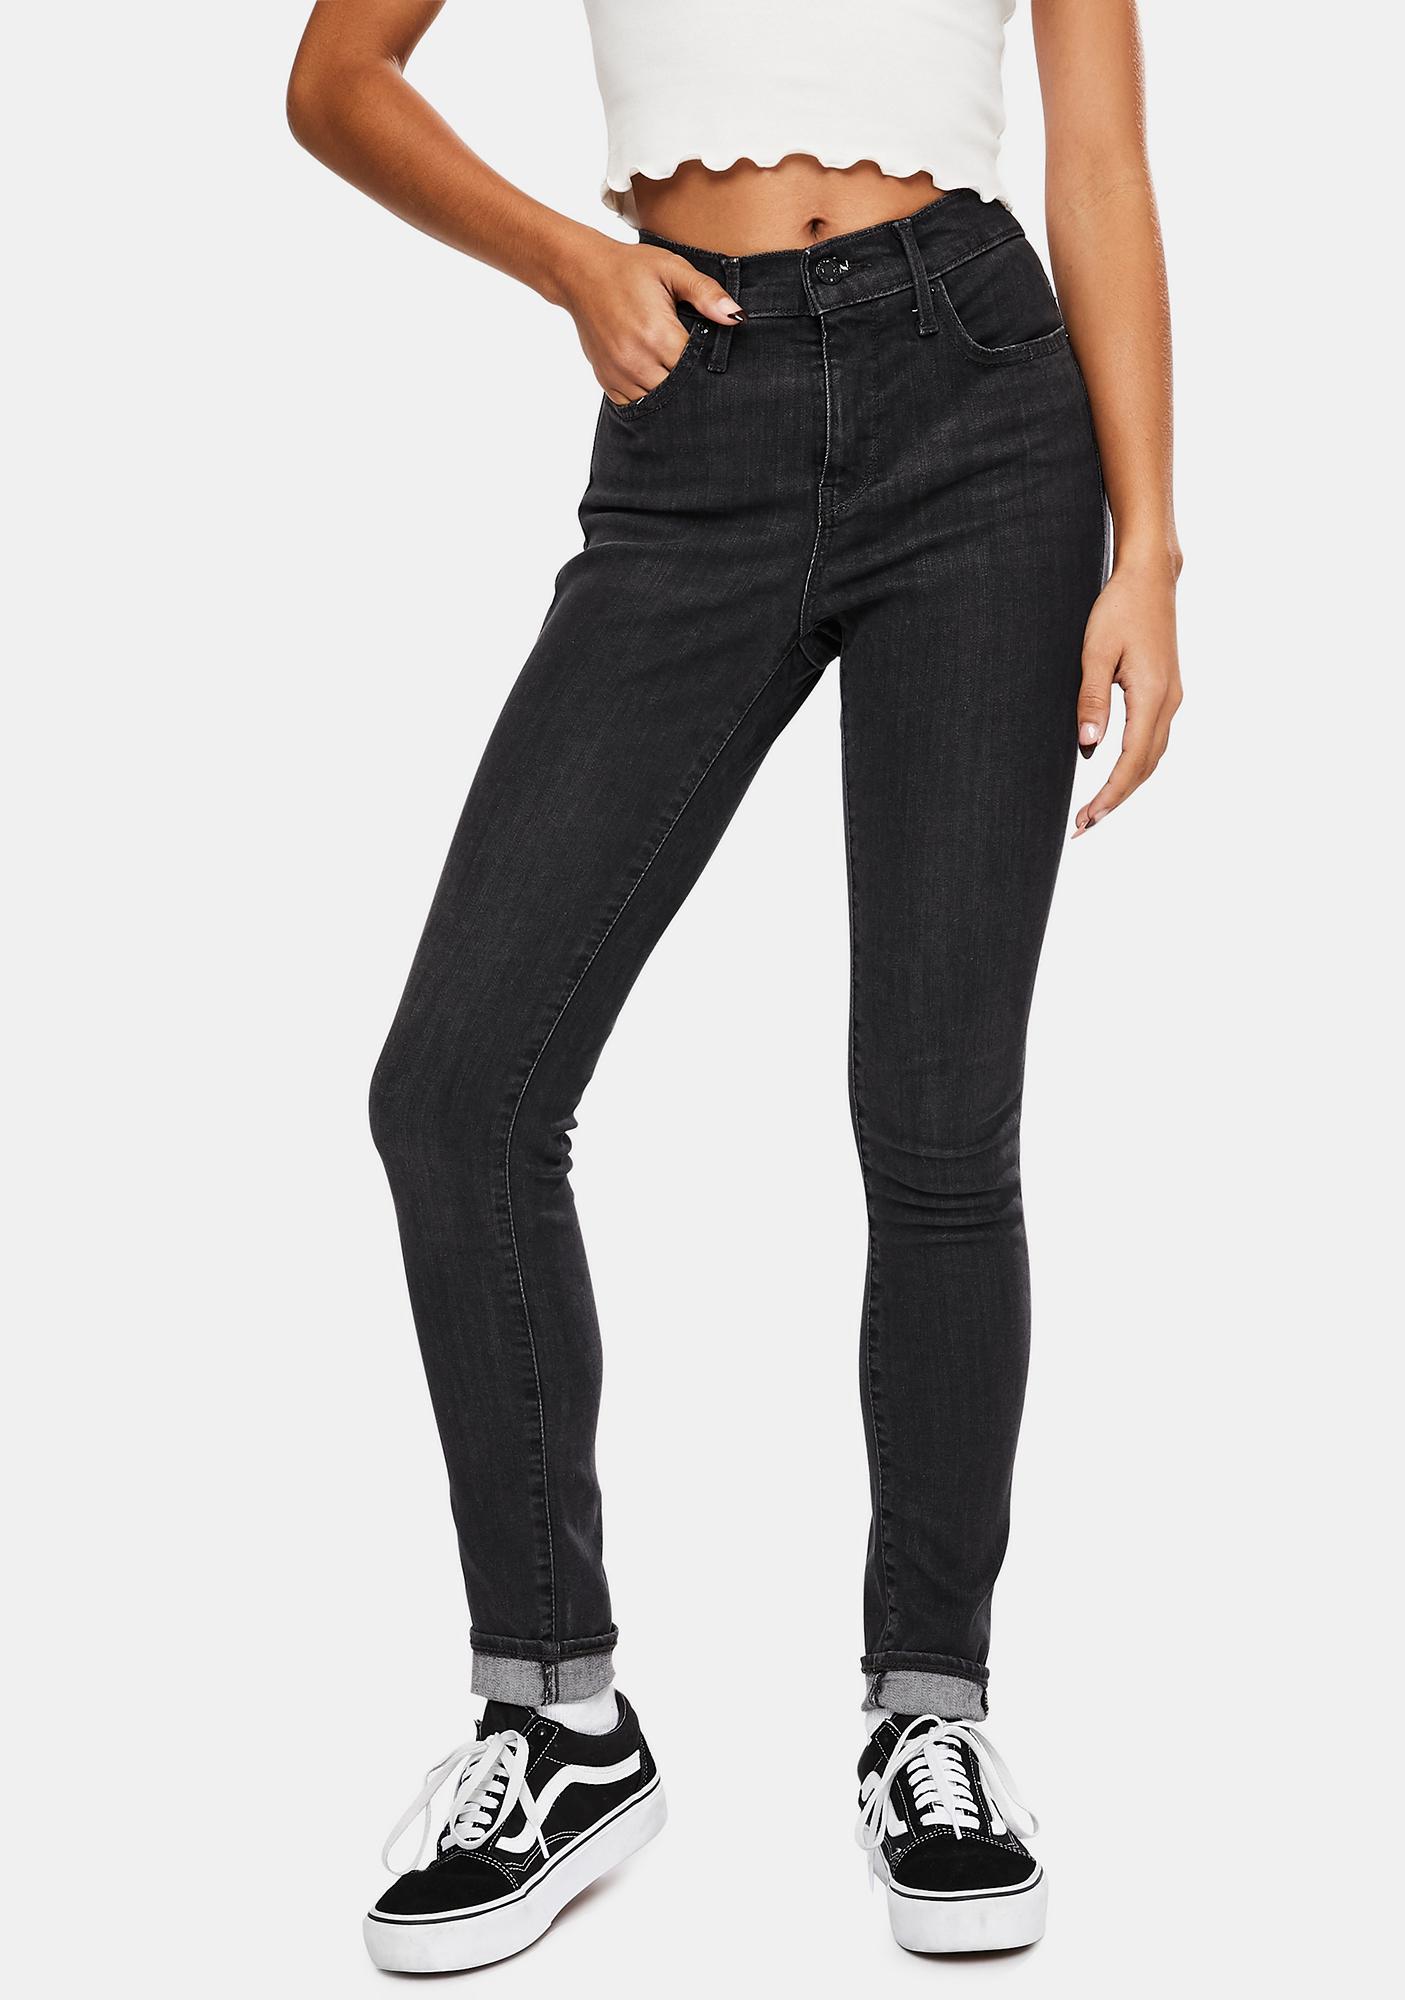 levi's 311 shaping skinny jeans black